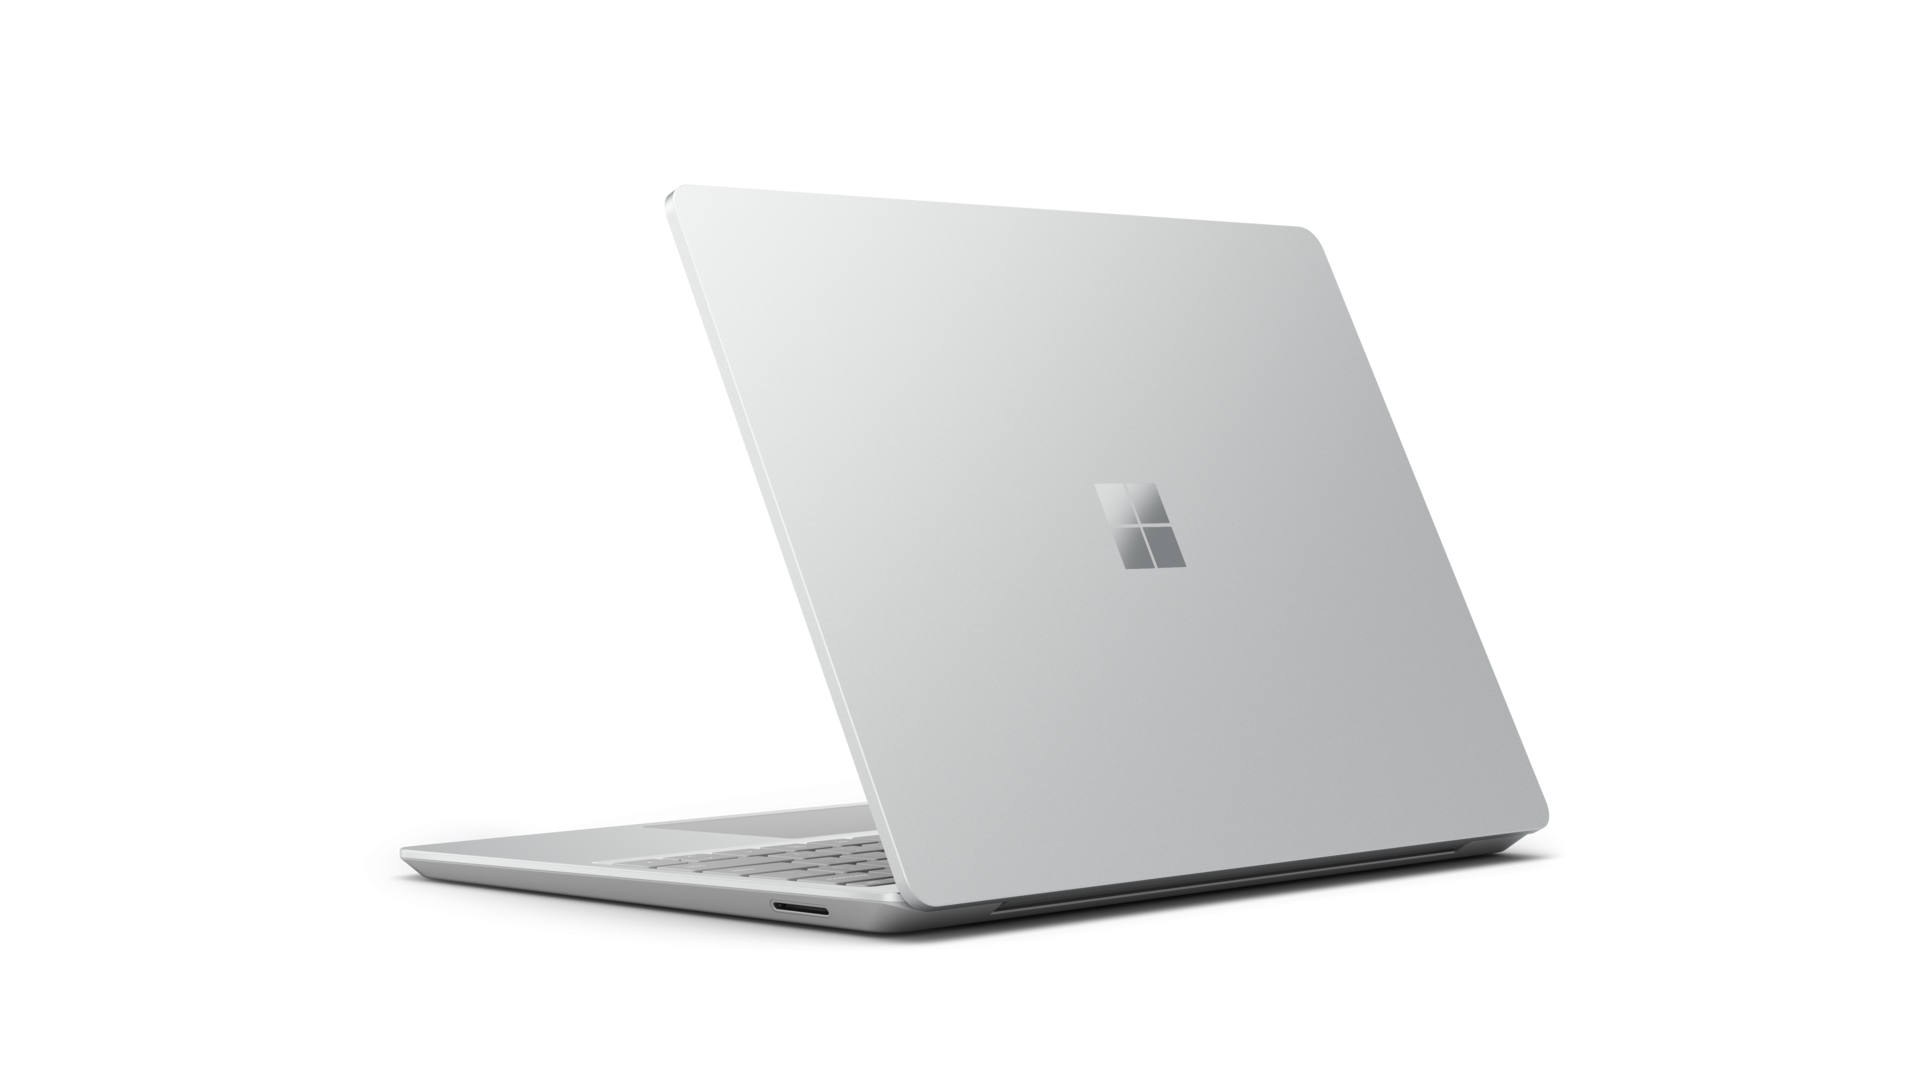 Microsoft Surface Laptop Go 2 i5/8GB/128GB - Platinum 